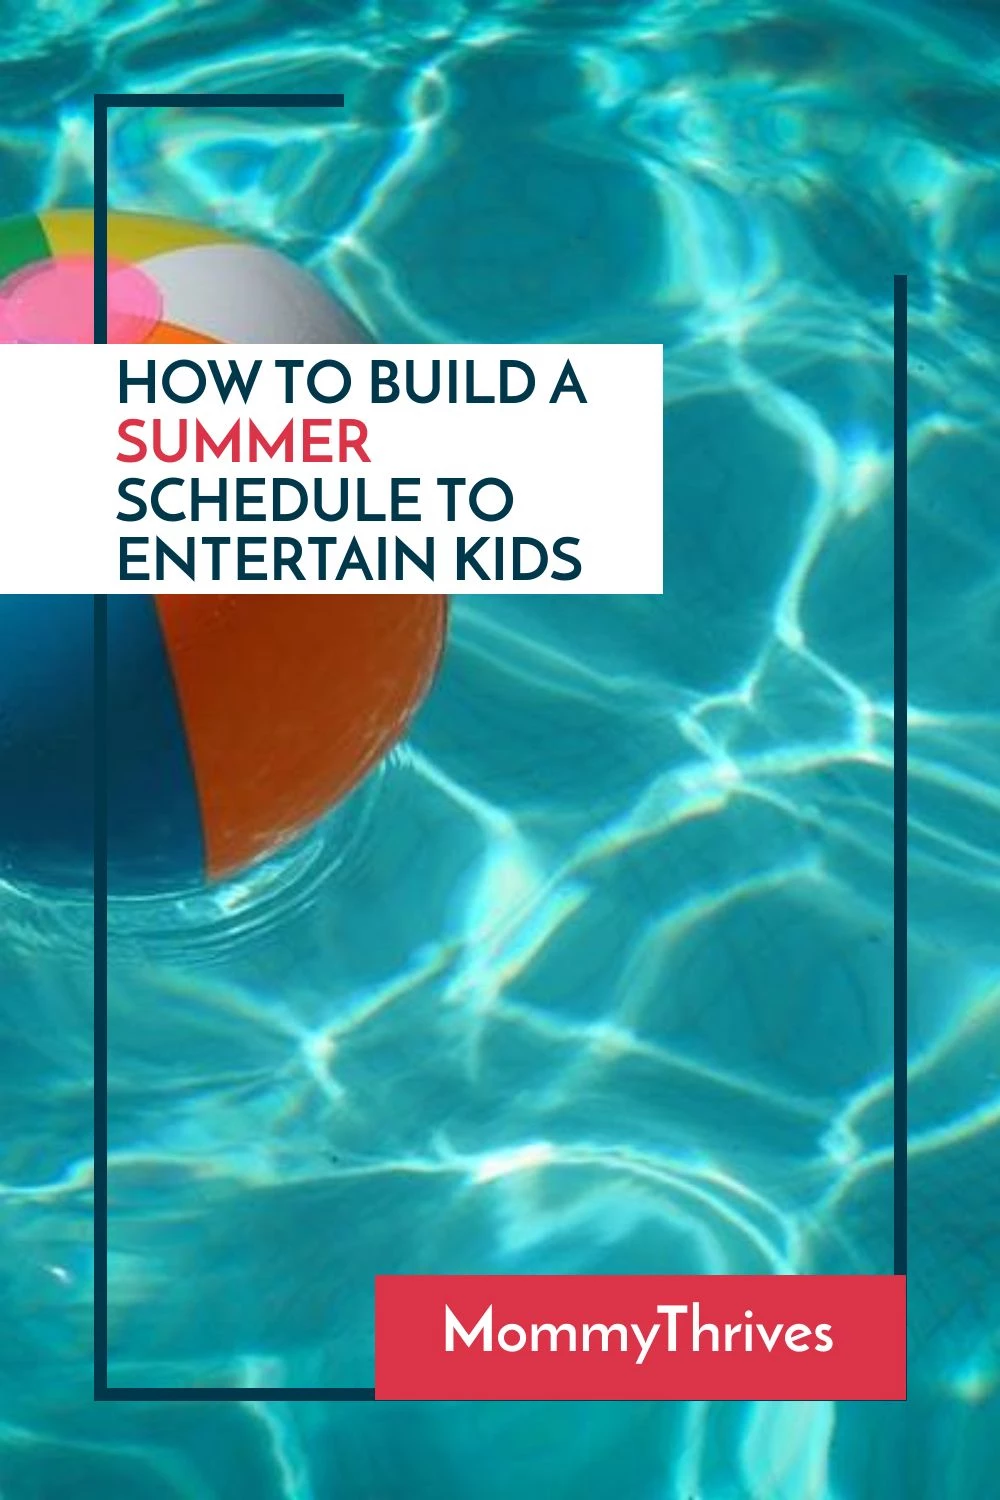 Summer Activites For Kids - Summer Schedule For Kids - Motherhood Tips and Tricks For Summer